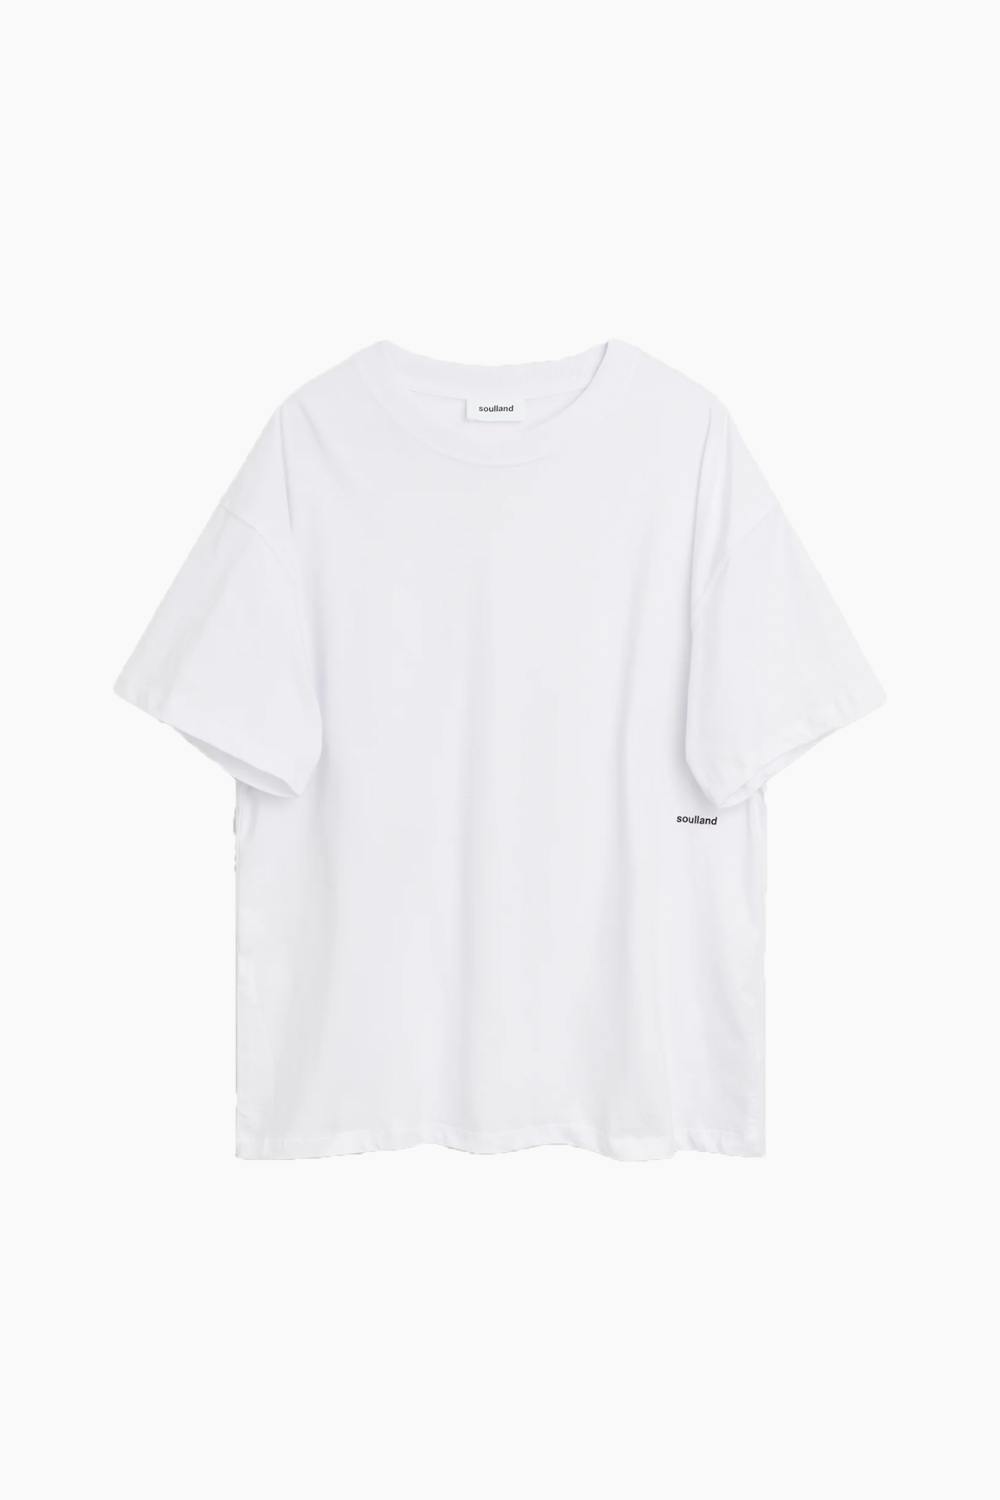 Se Ash T-shirt - White - Soulland - Hvid XS/S hos QNTS.dk